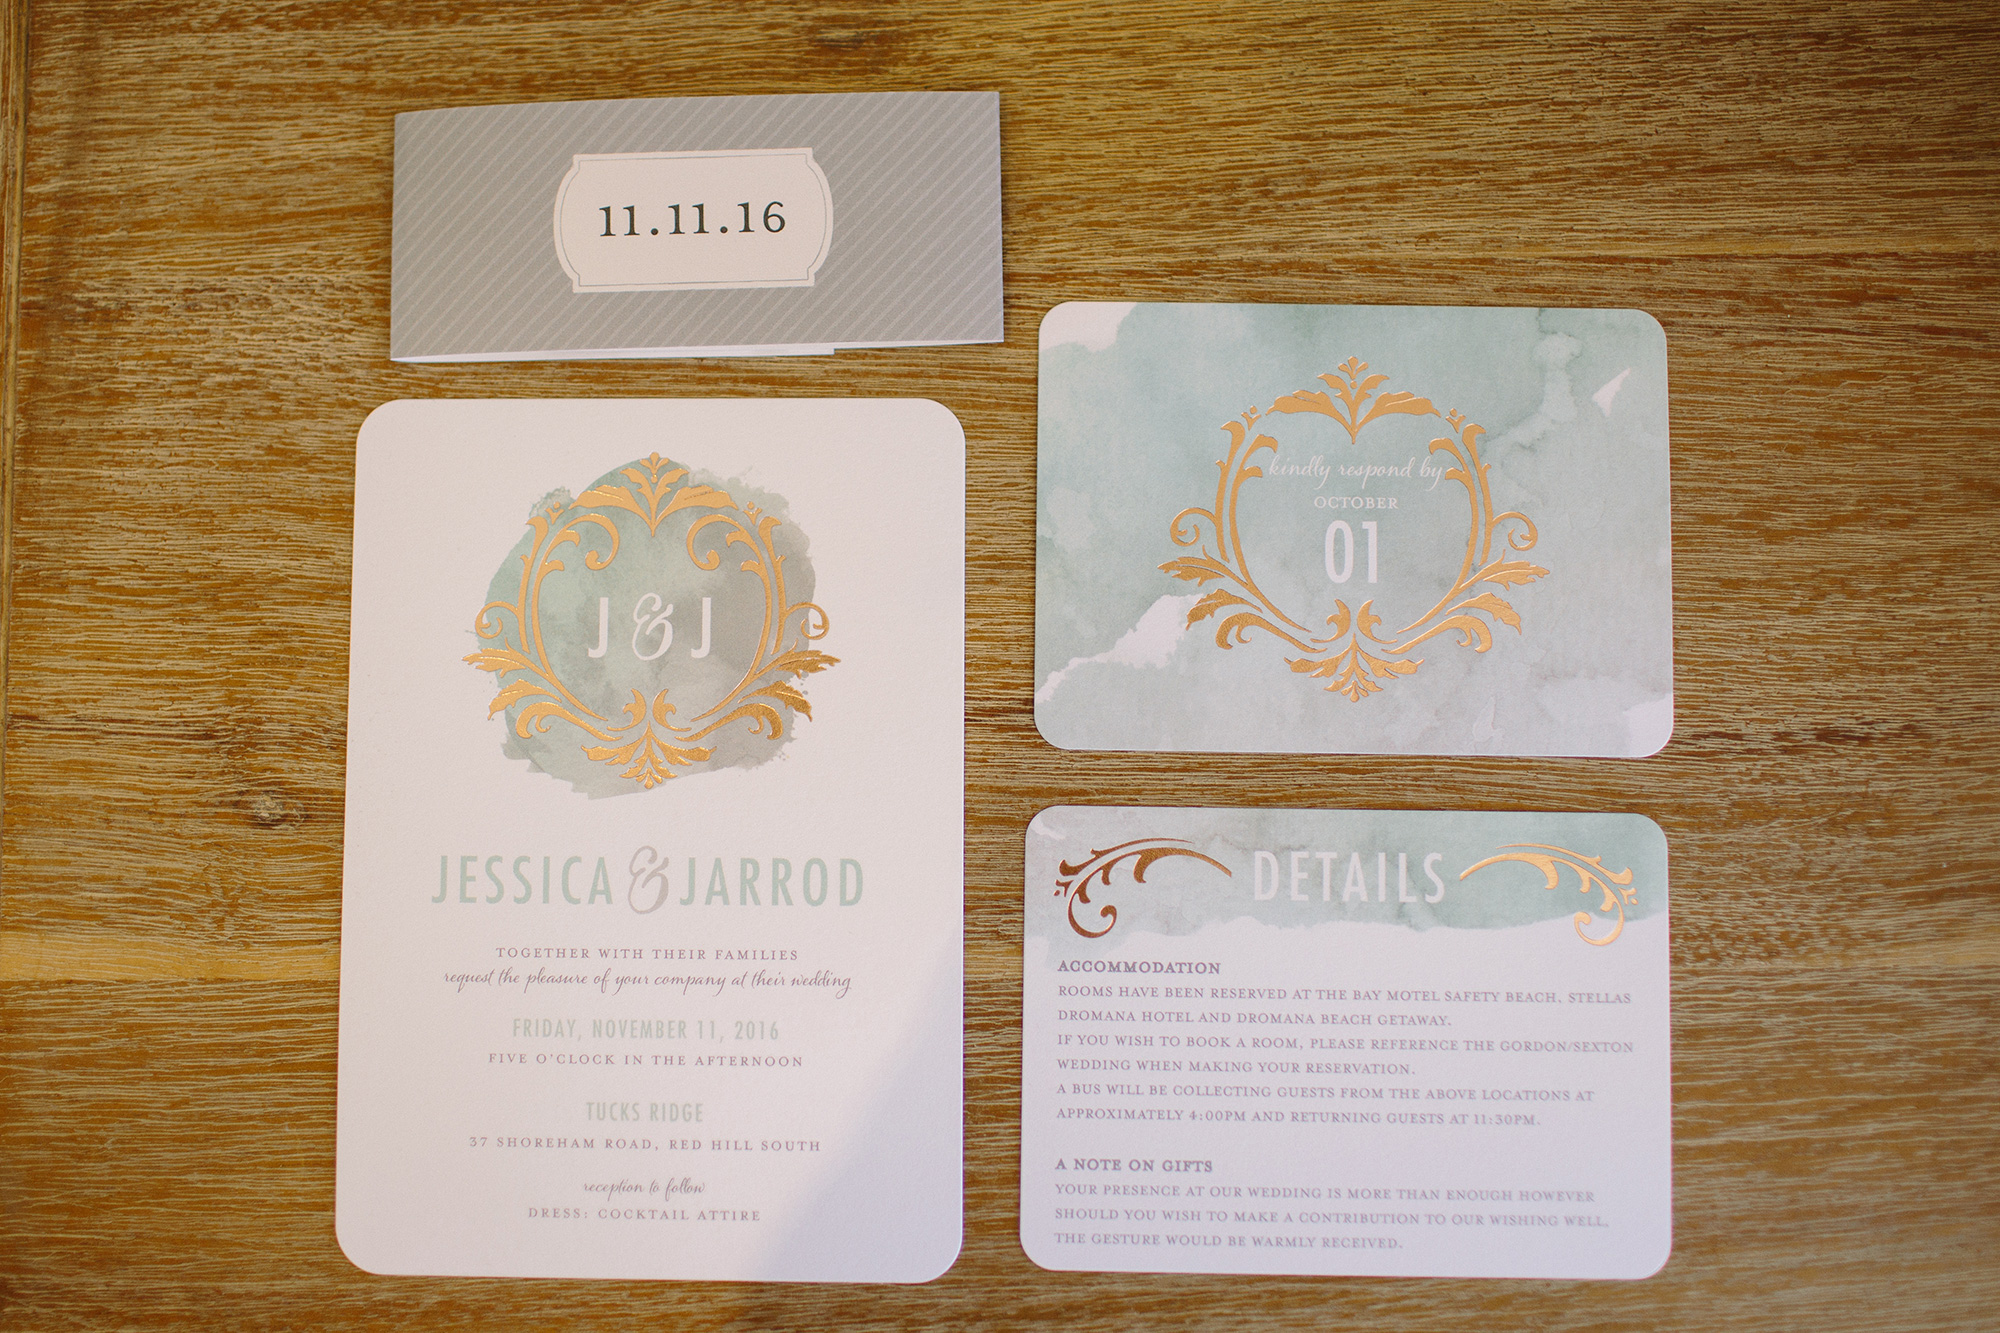 Jessica_Jarrod_Romantic-Boho-Wedding_012